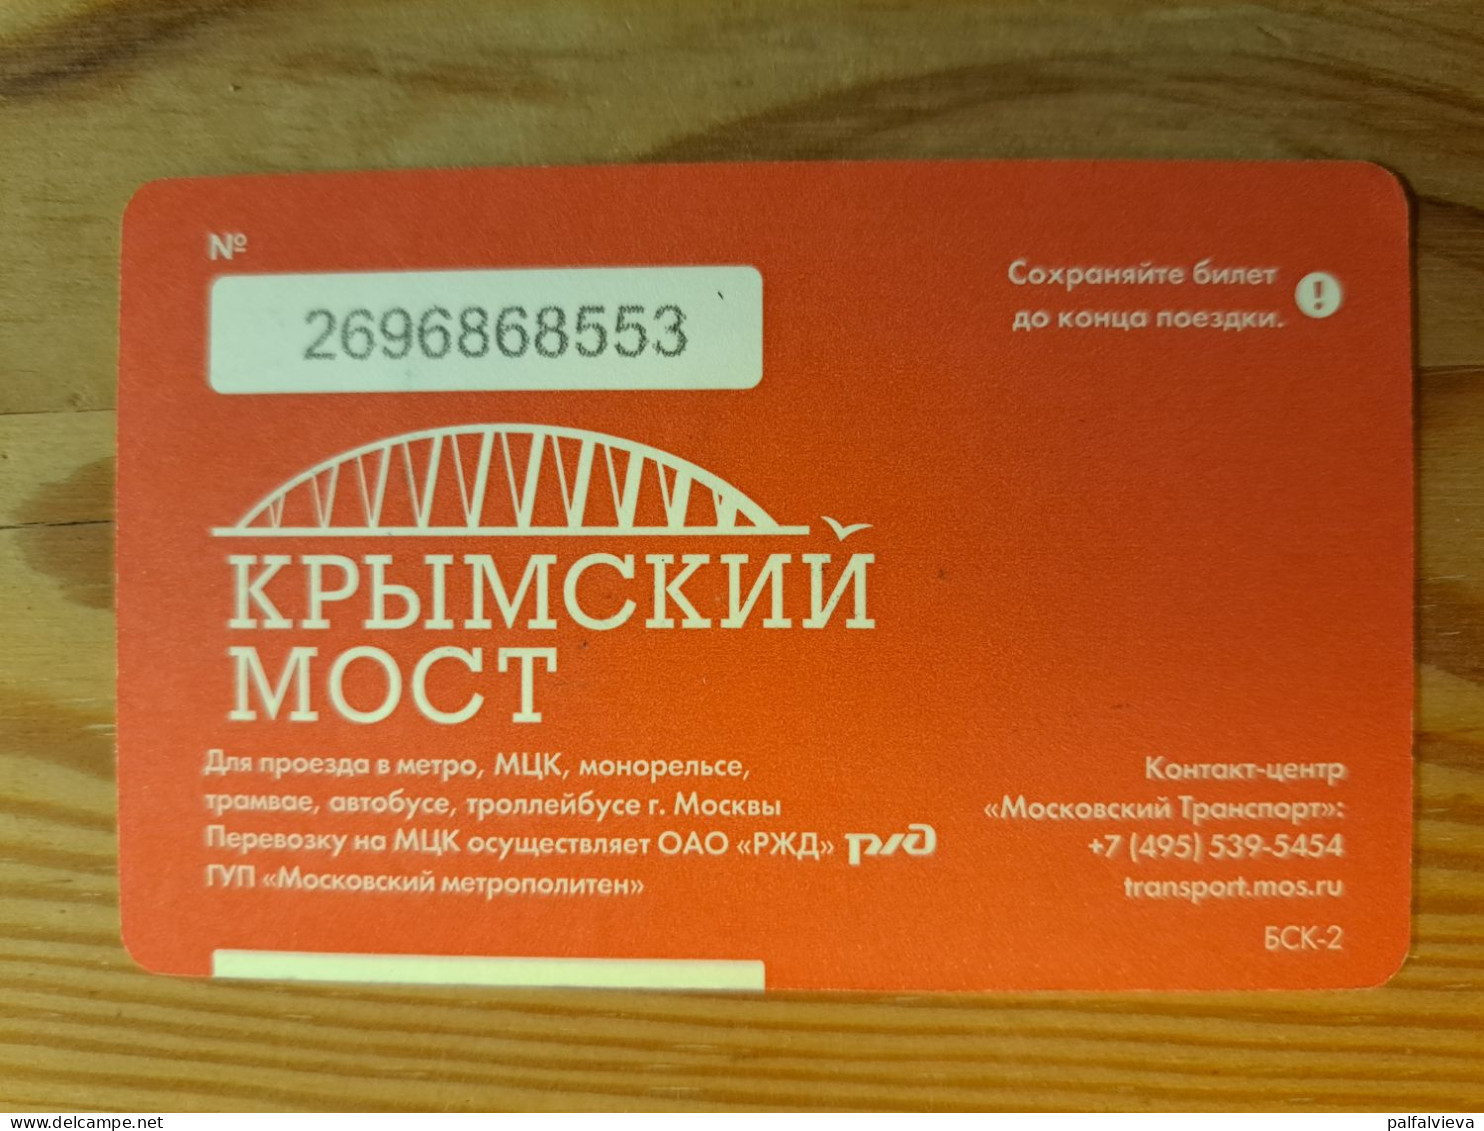 Transport Ticket Russia, Moscow - Bridge - Europa